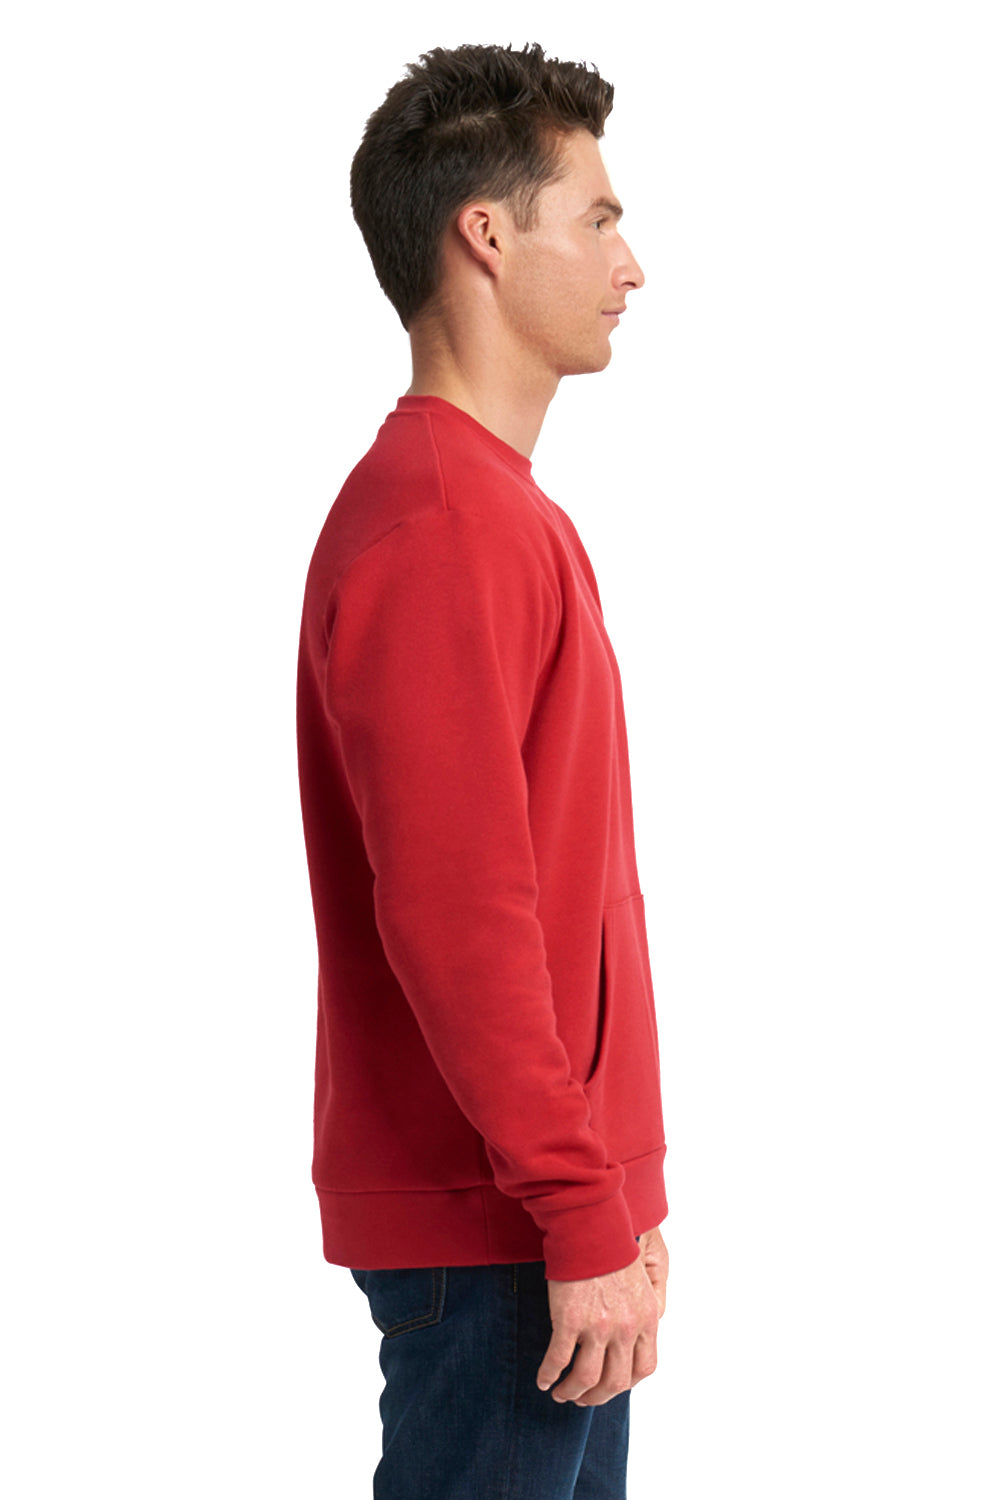 Next Level 9001 Fleece Crewneck Sweatshirt Red Side